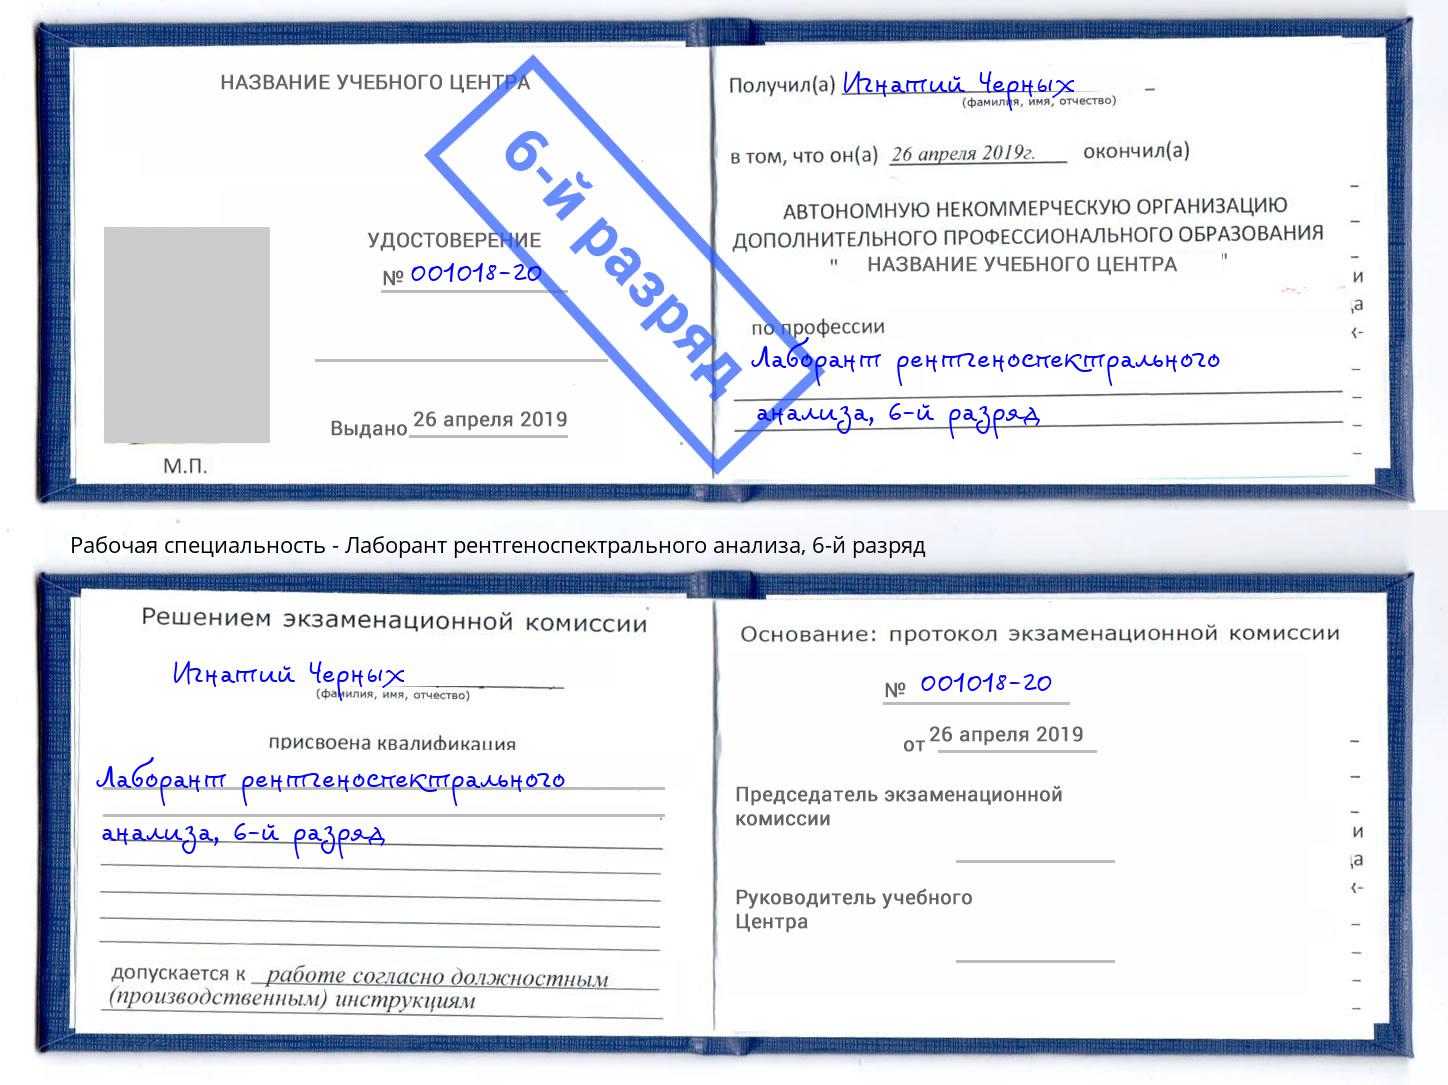 корочка 6-й разряд Лаборант рентгеноспектрального анализа Ханты-Мансийск